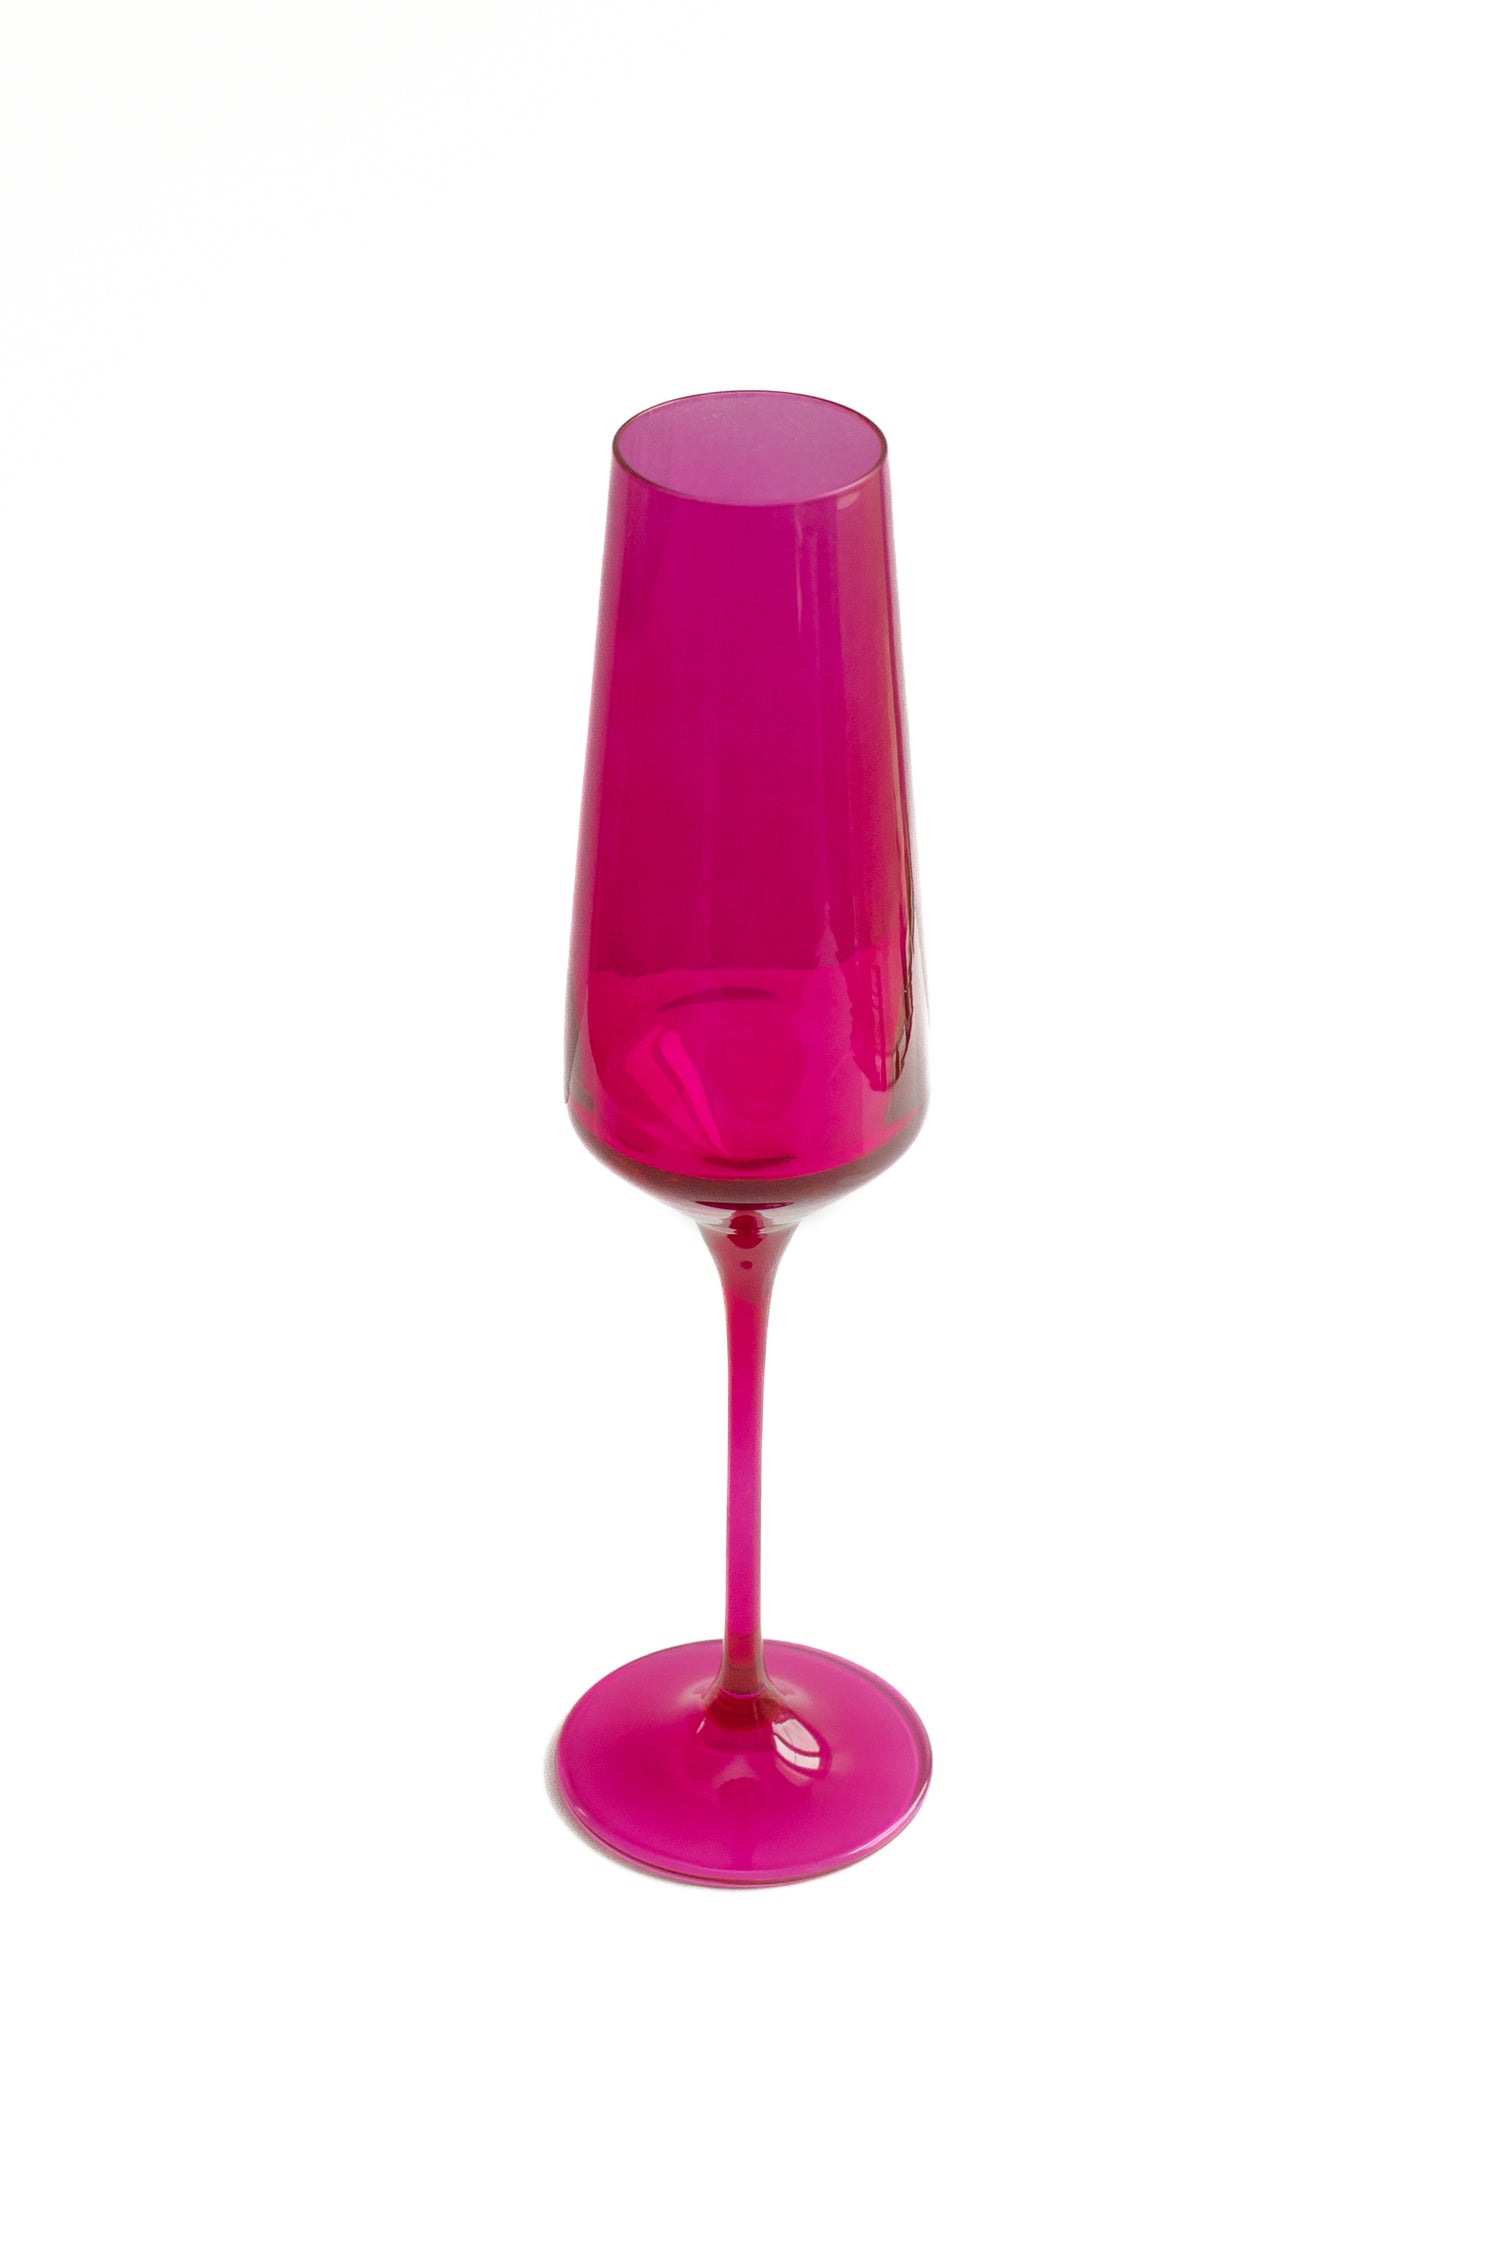 Estelle Colored Champagne Flute - Set of 2 {Viva Magenta (Our Fuchsia)}